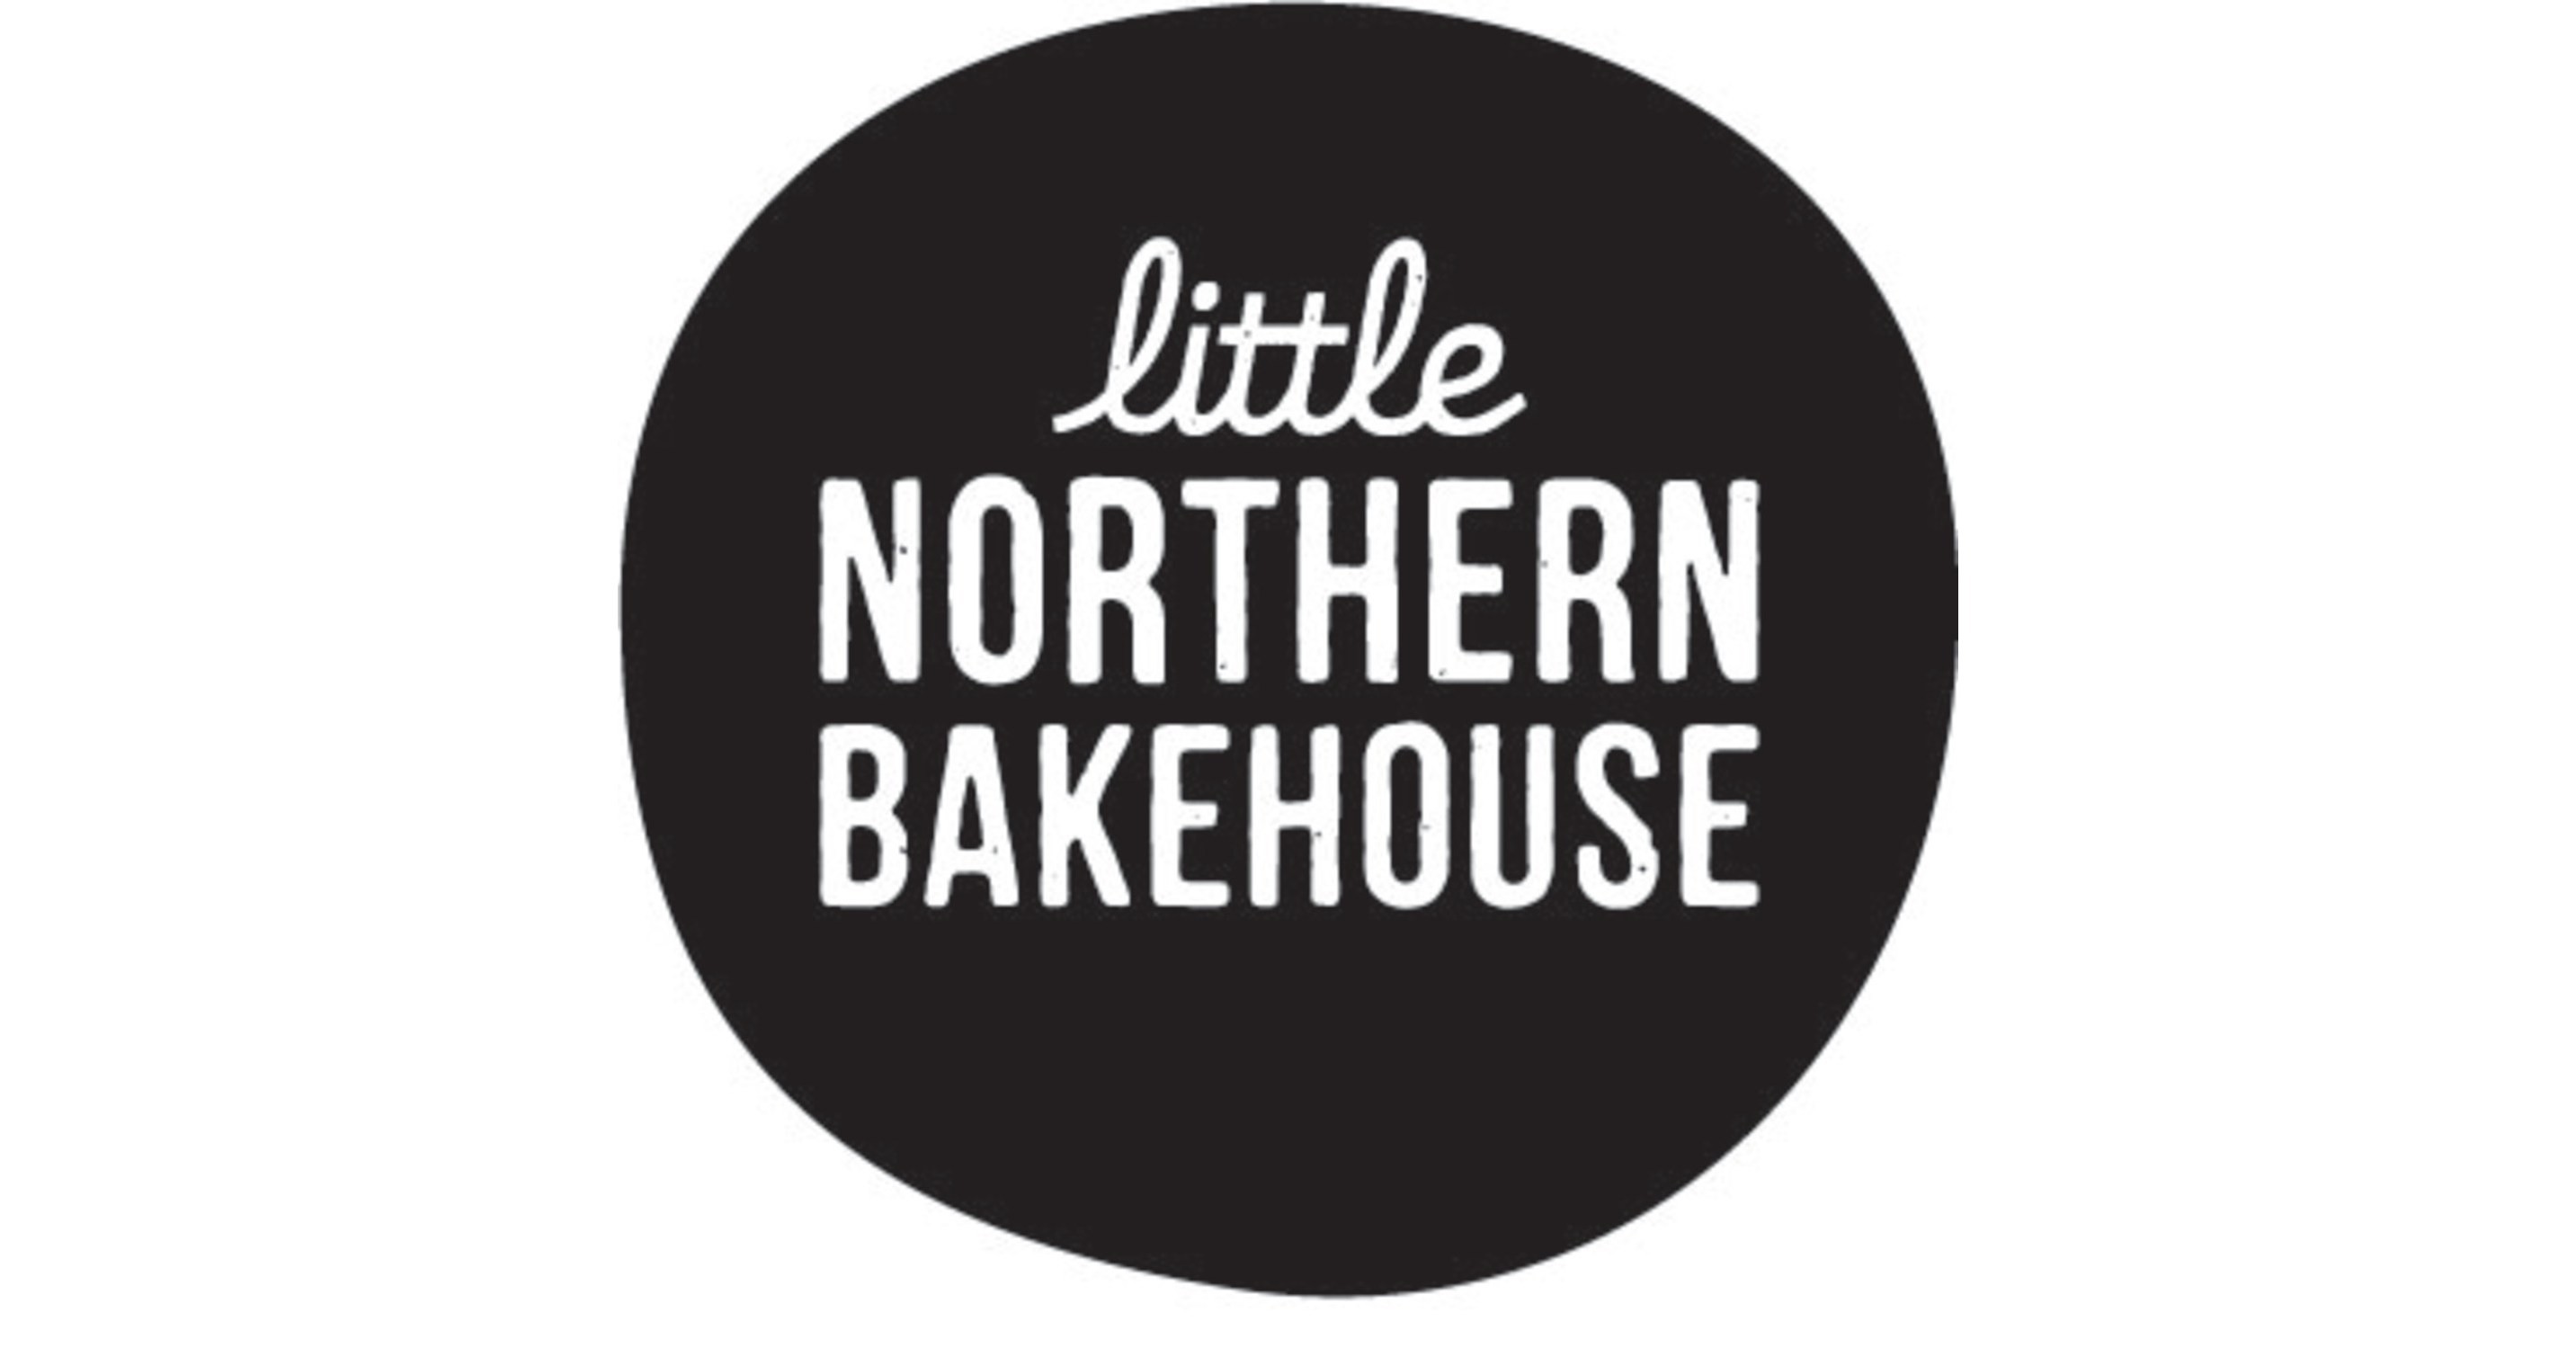 LITTLE NORTHERN BAKEHOUSE